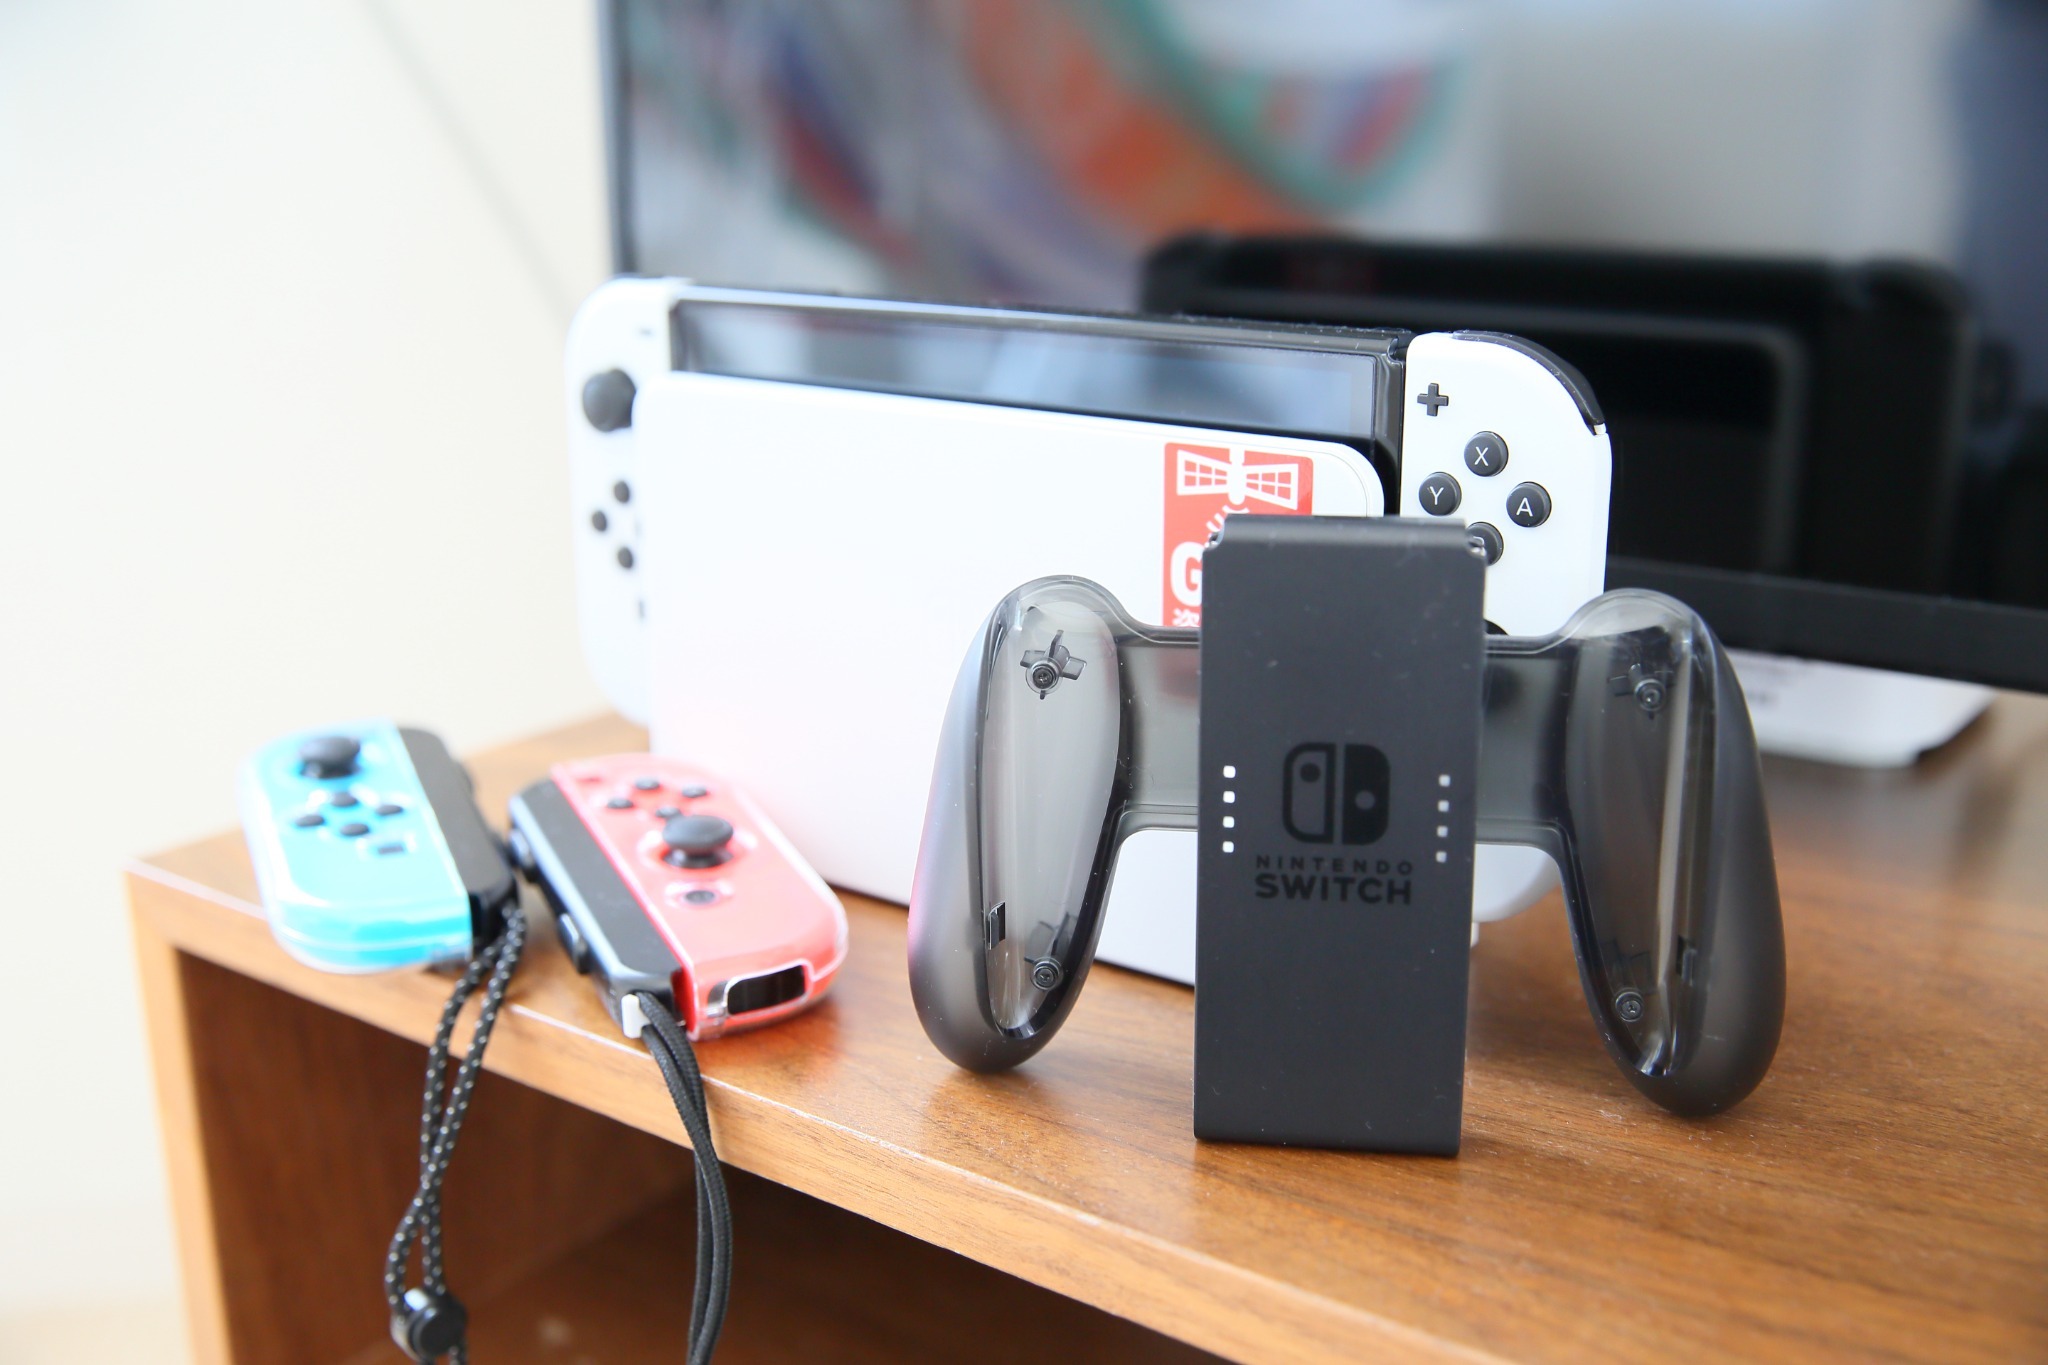 Nintendo Switch(有機ELモデル)を完備。超人気のソフトが搭載! ”スプラトゥーン3”  ”マリオカート8”  ”Nintendo Switch Sports” 